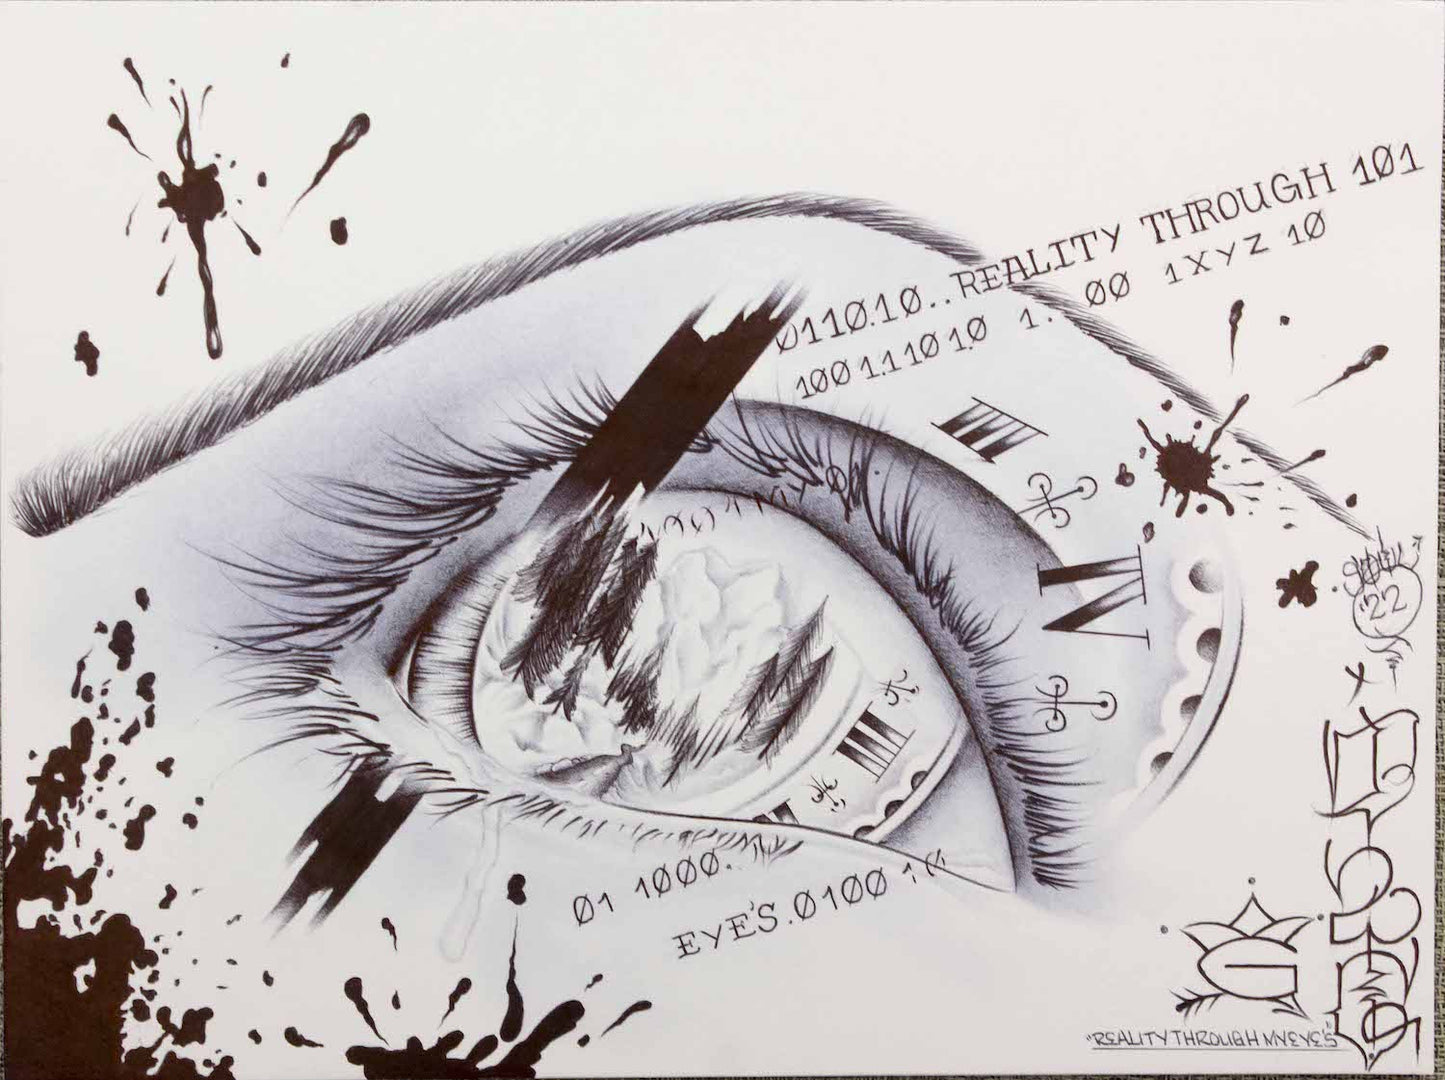 "Reality through my eyes" prison art original art Jonathan Emery 